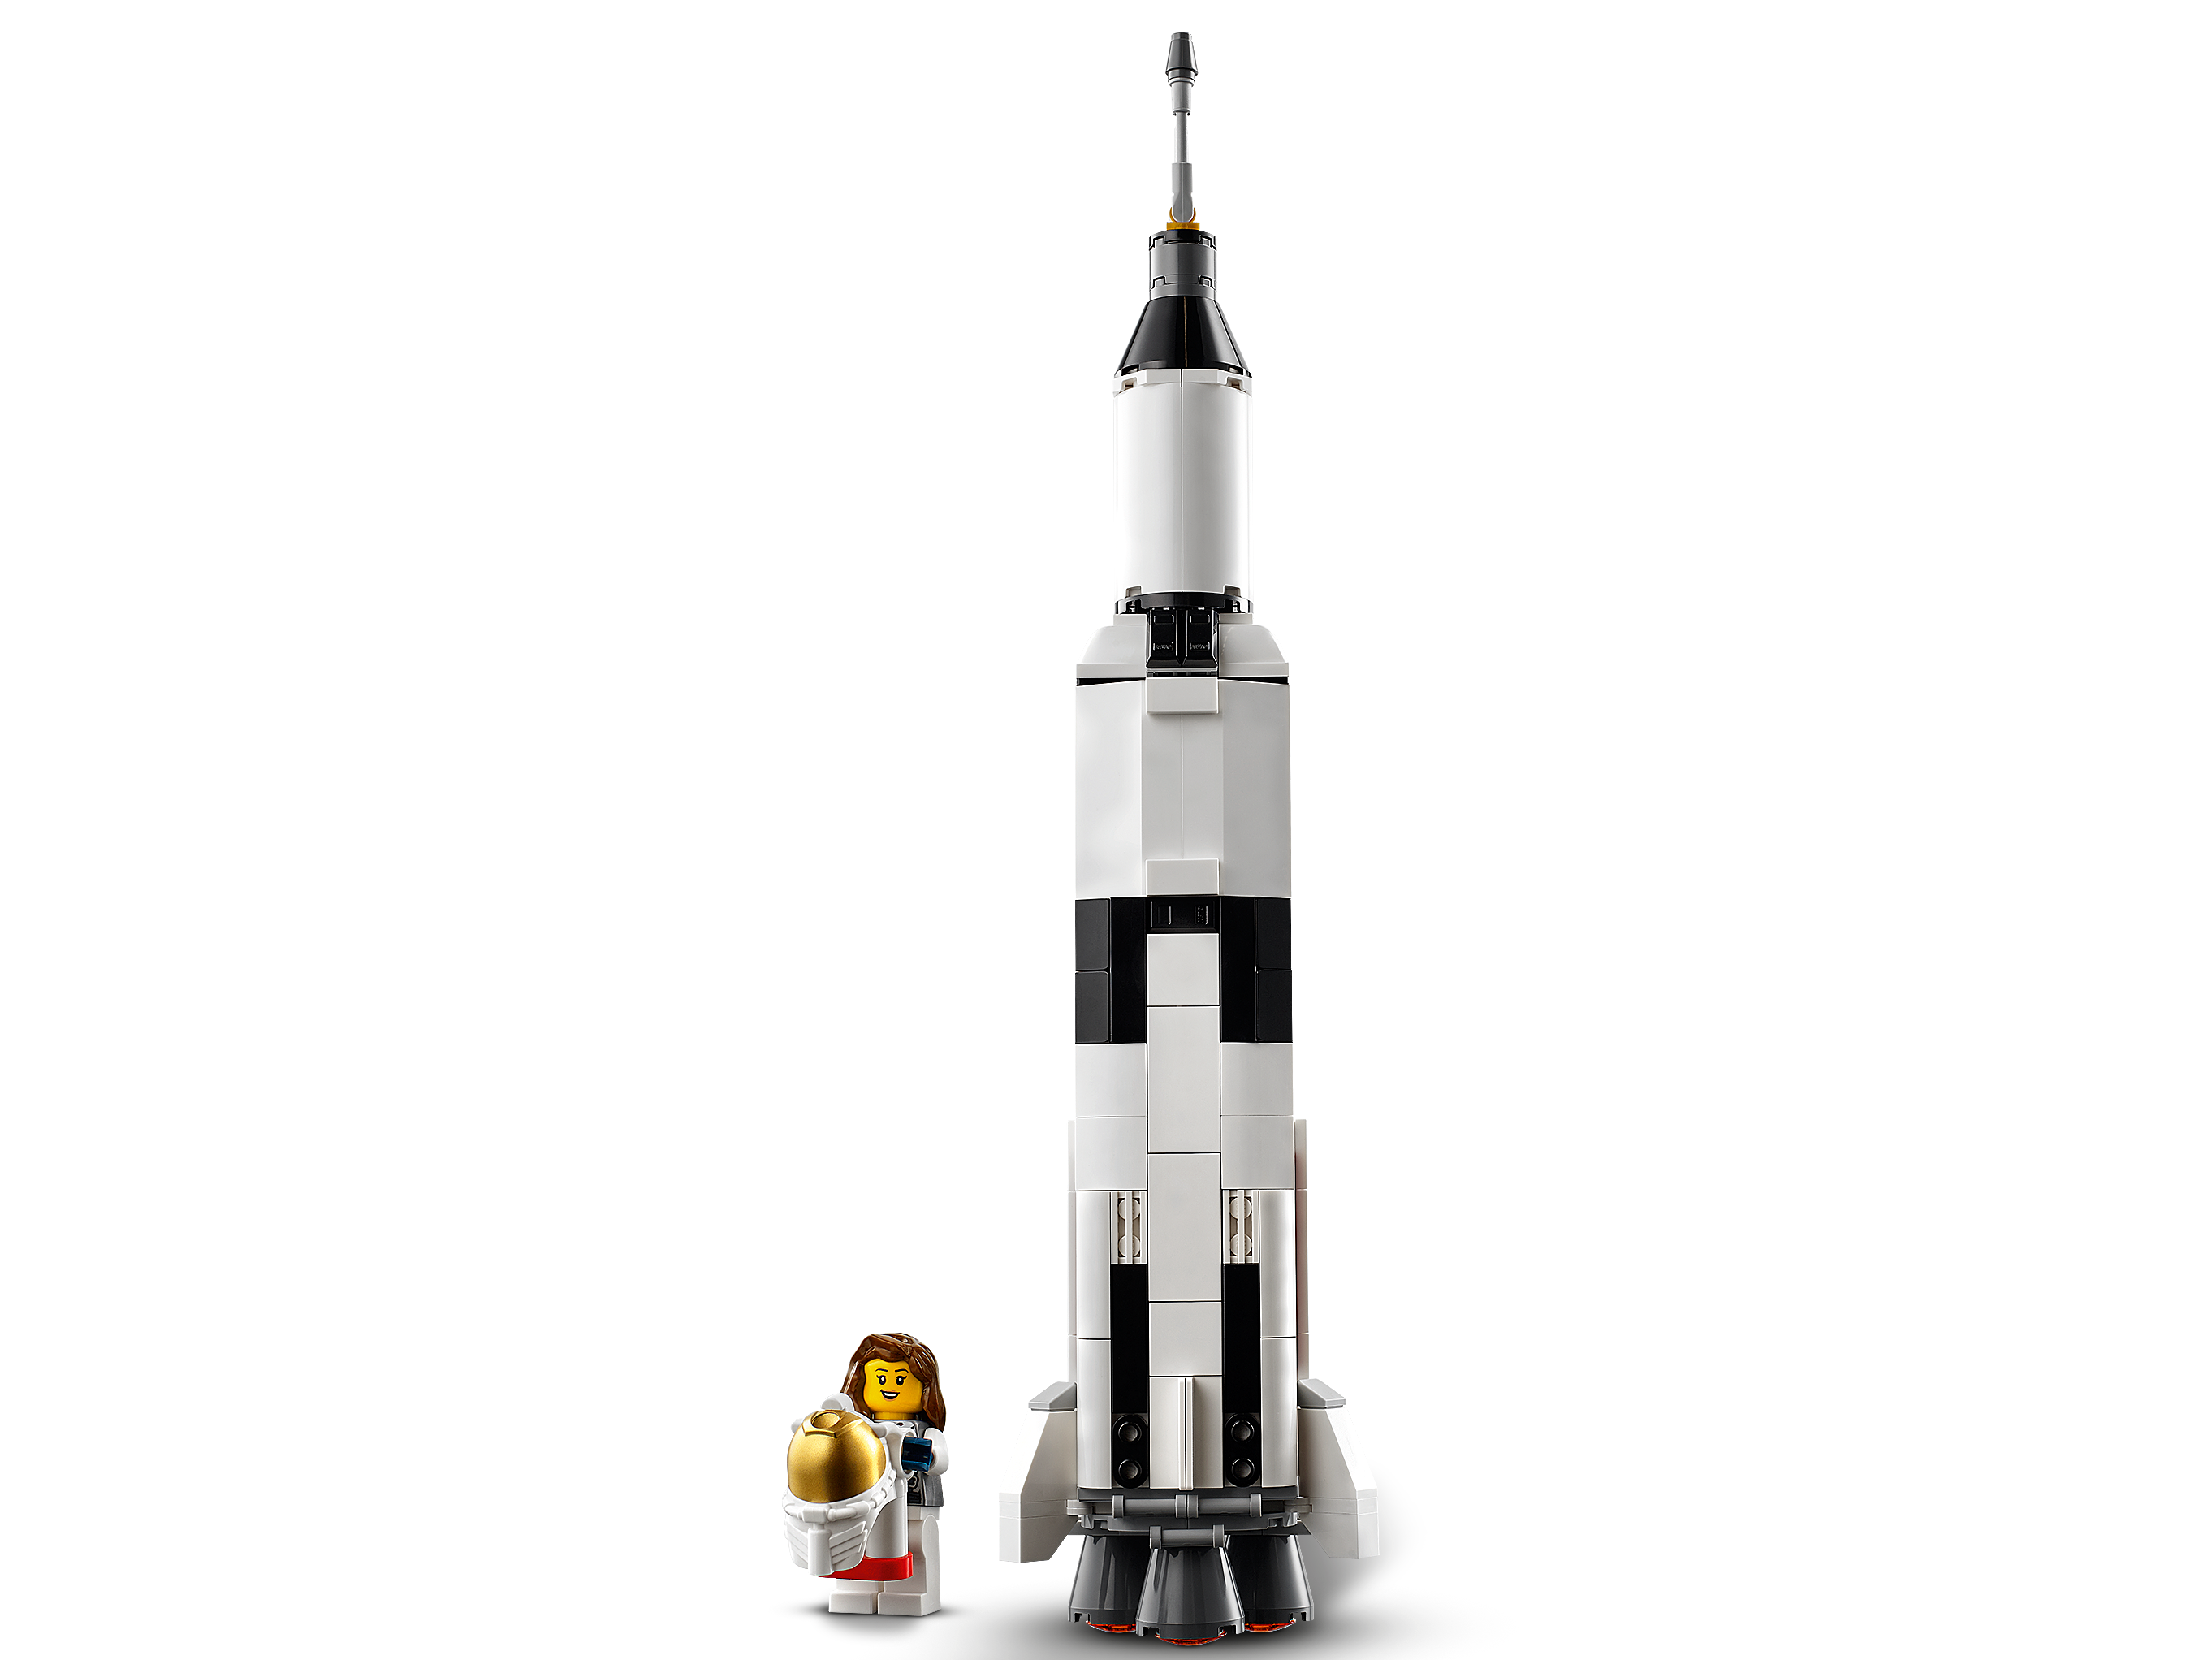 Lego In Shuttle | vlr.eng.br